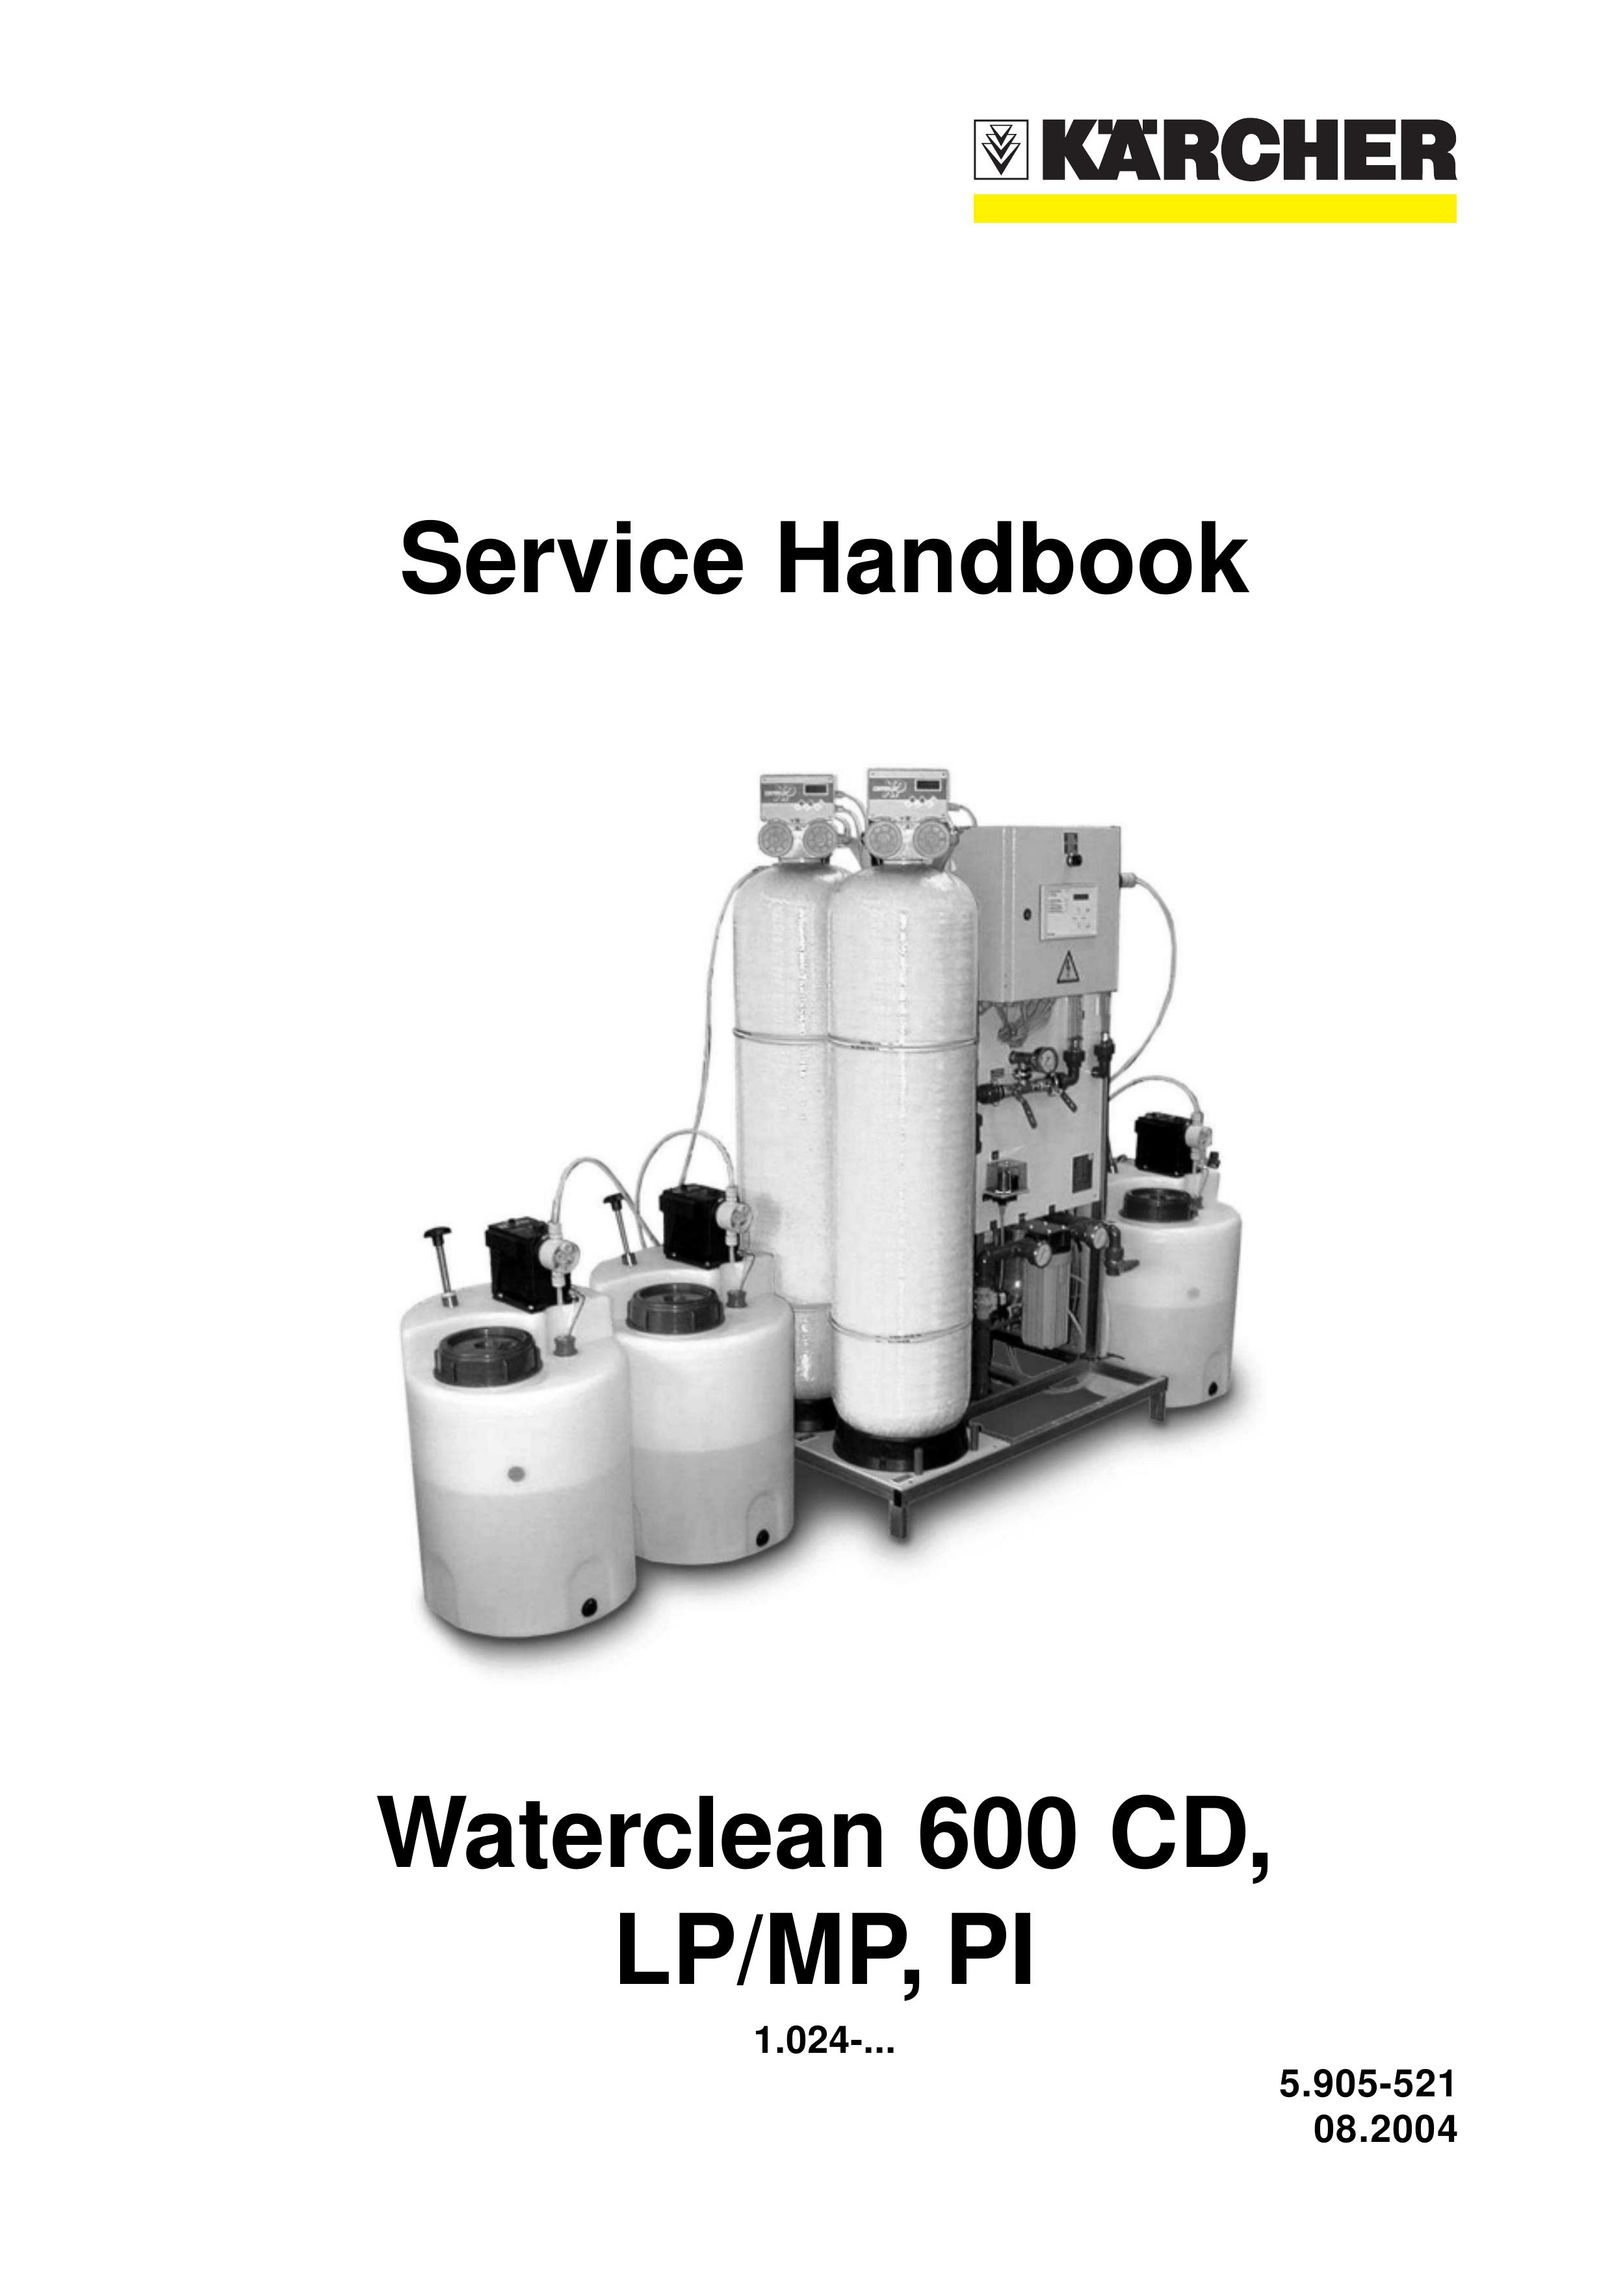 Karcher 600 CD Water System User Manual